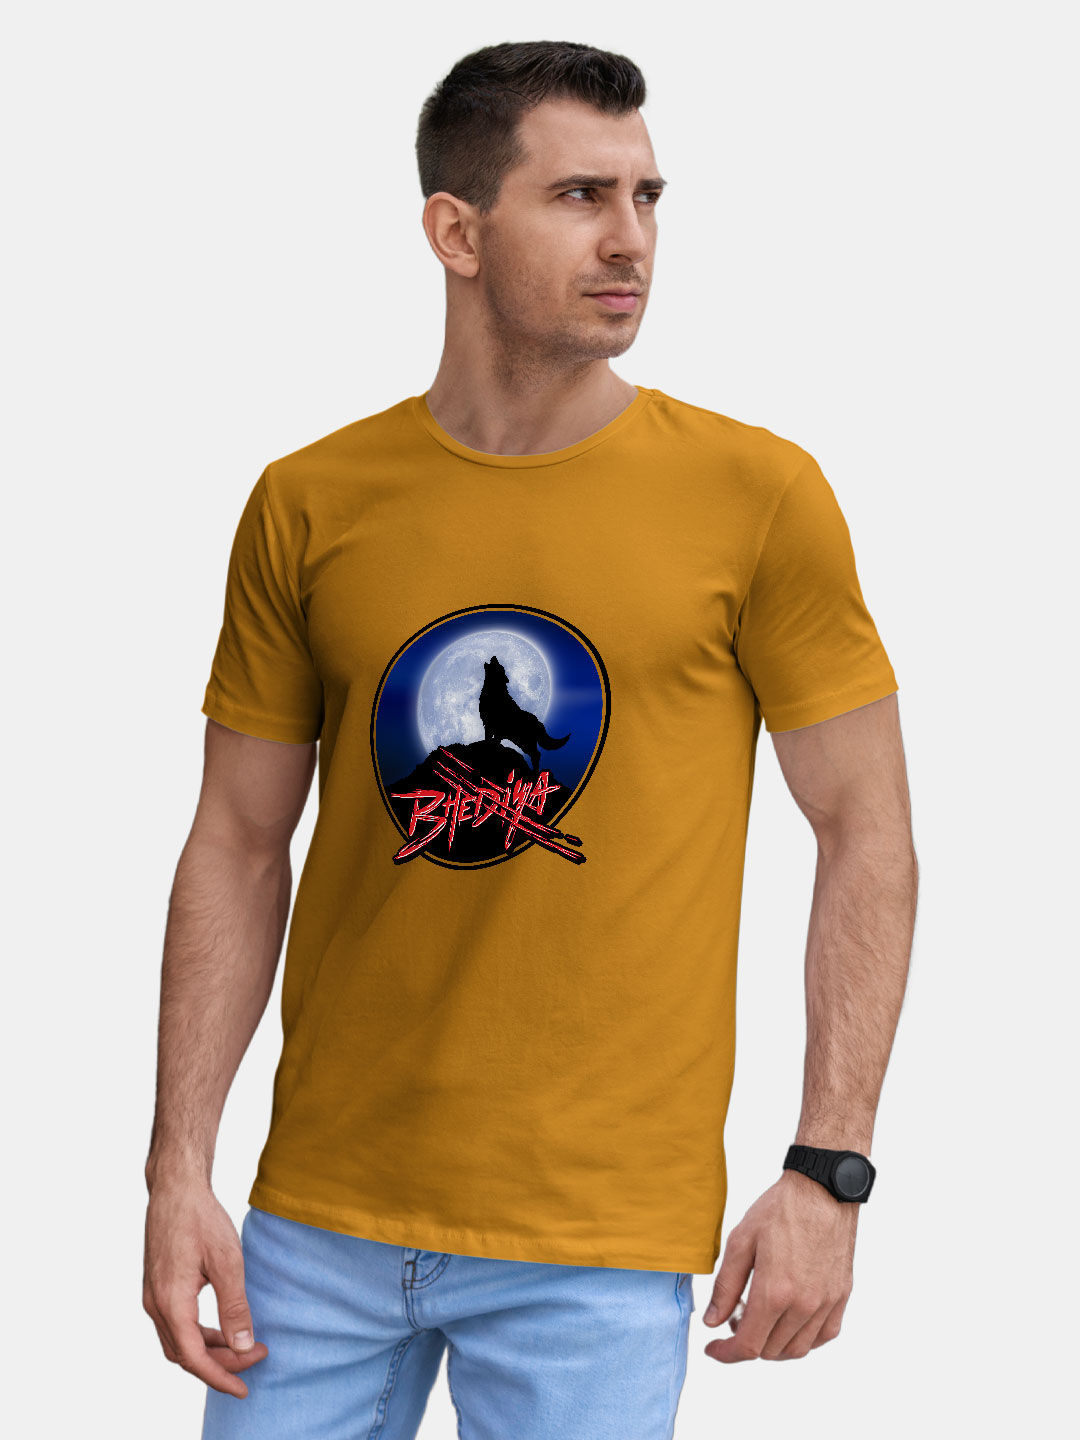 Buy Bhediya Growl Yellow - Male Designer T-Shirts T-Shirts Online